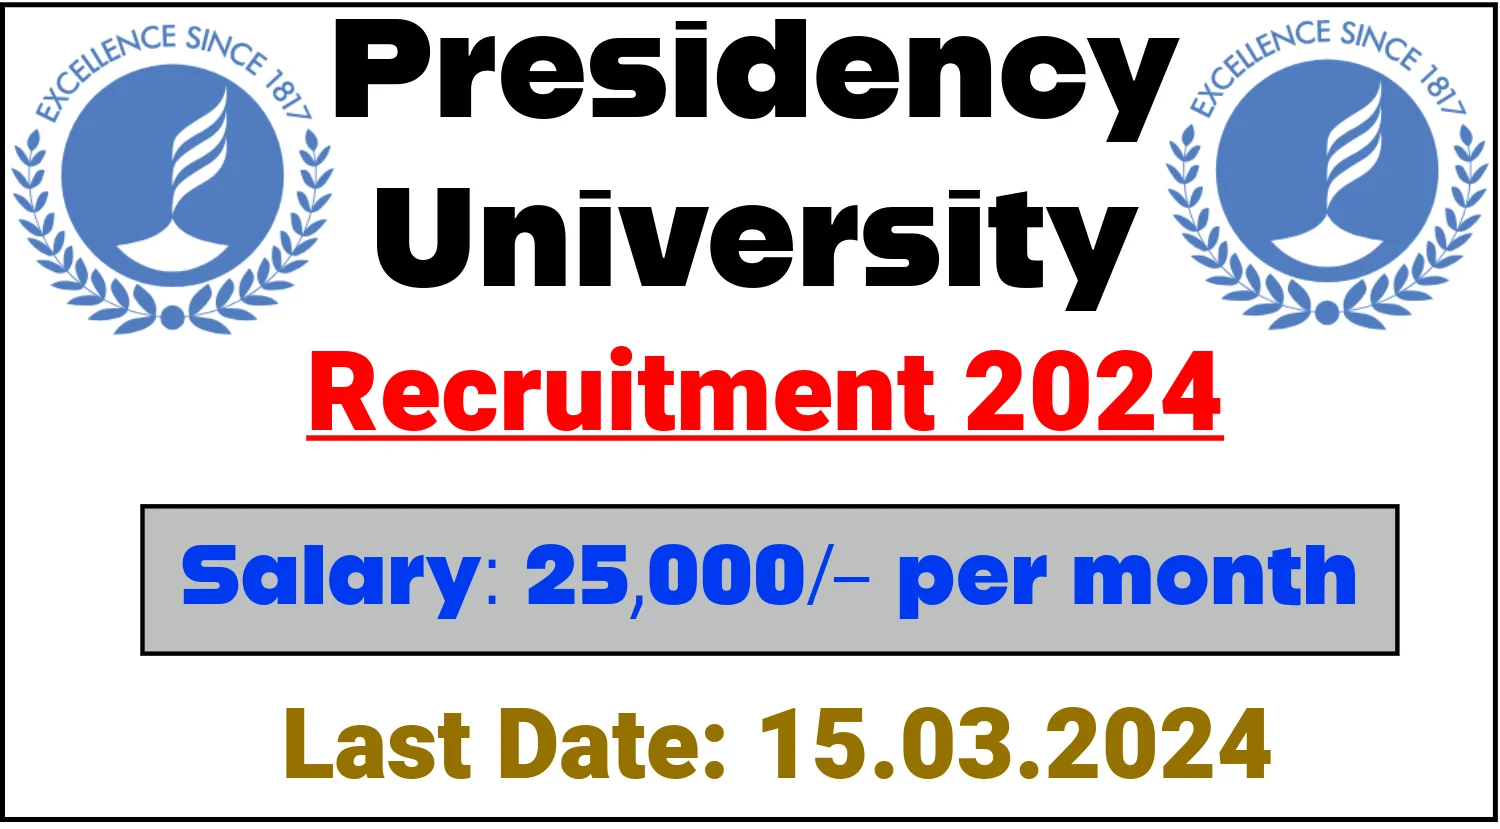 Presidency University Recruitment 2024